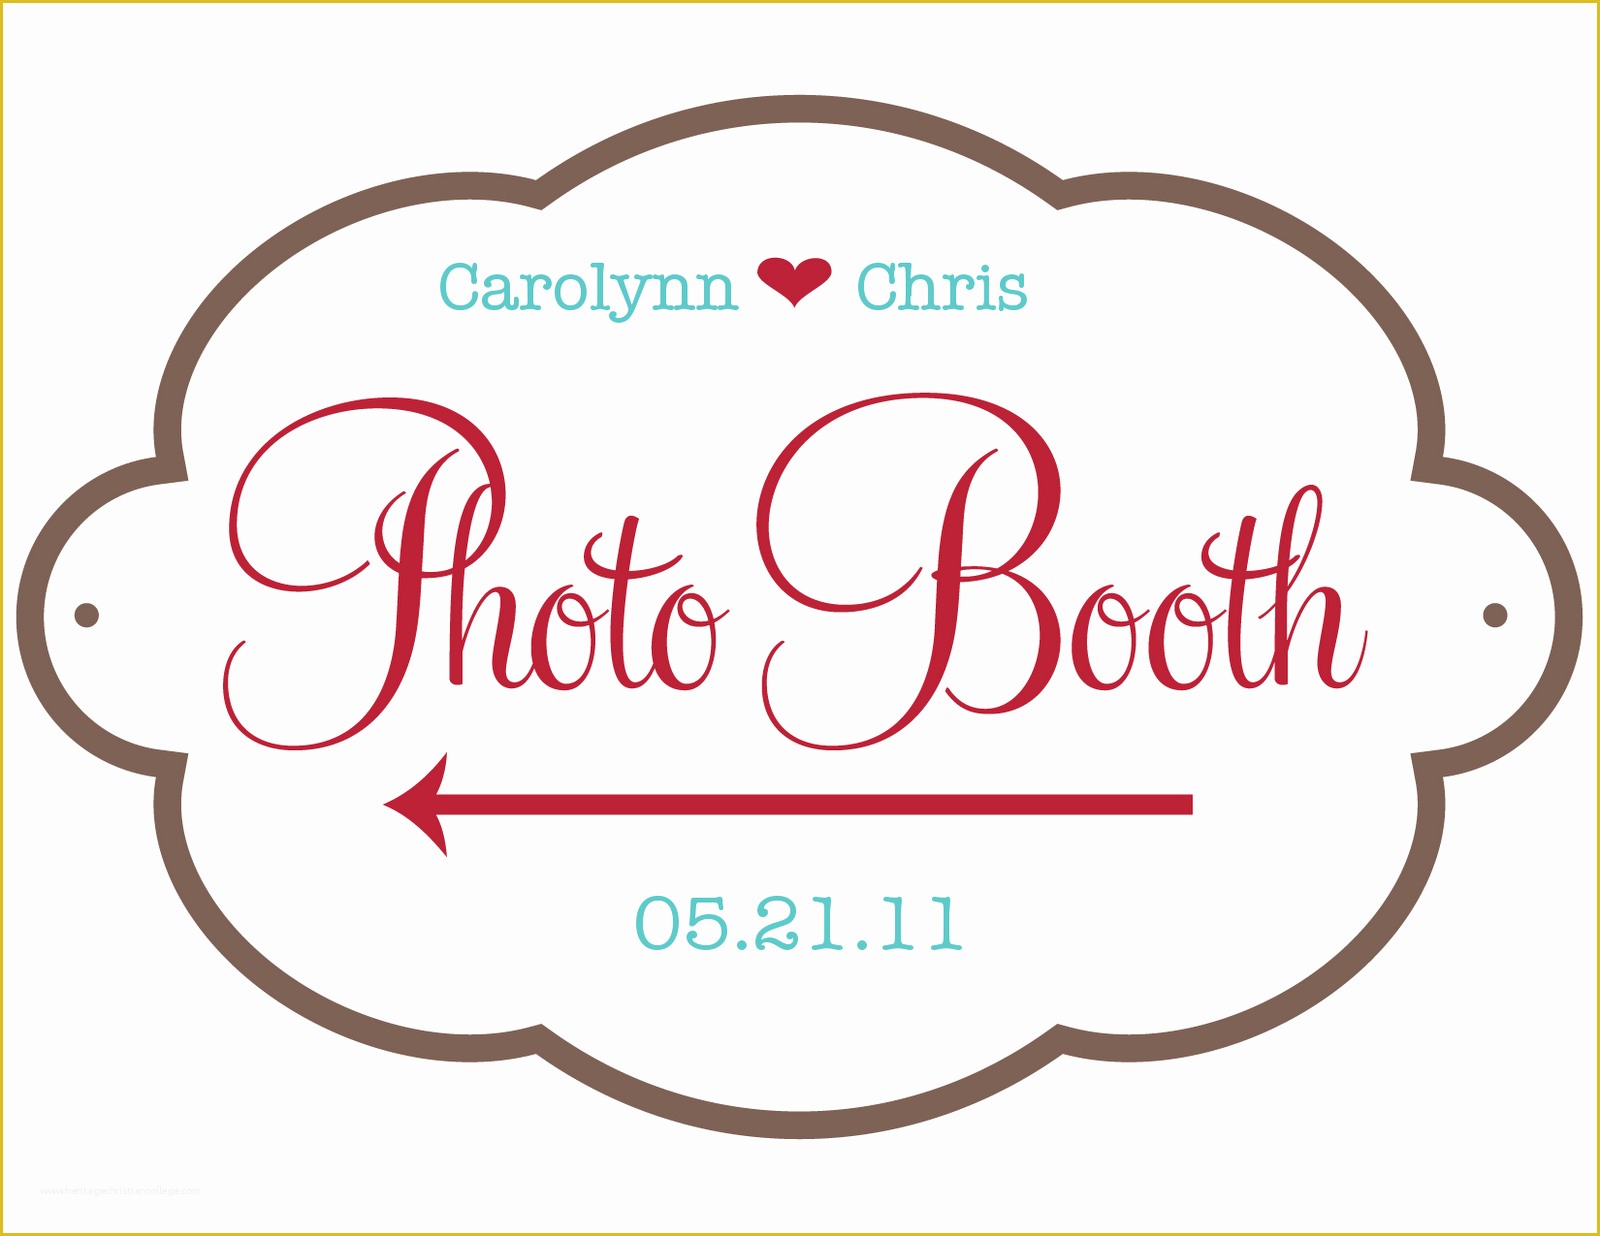 Free Wedding Sign Templates Of Chris and Carolynn Newlyweds Free Wedding Graphics and